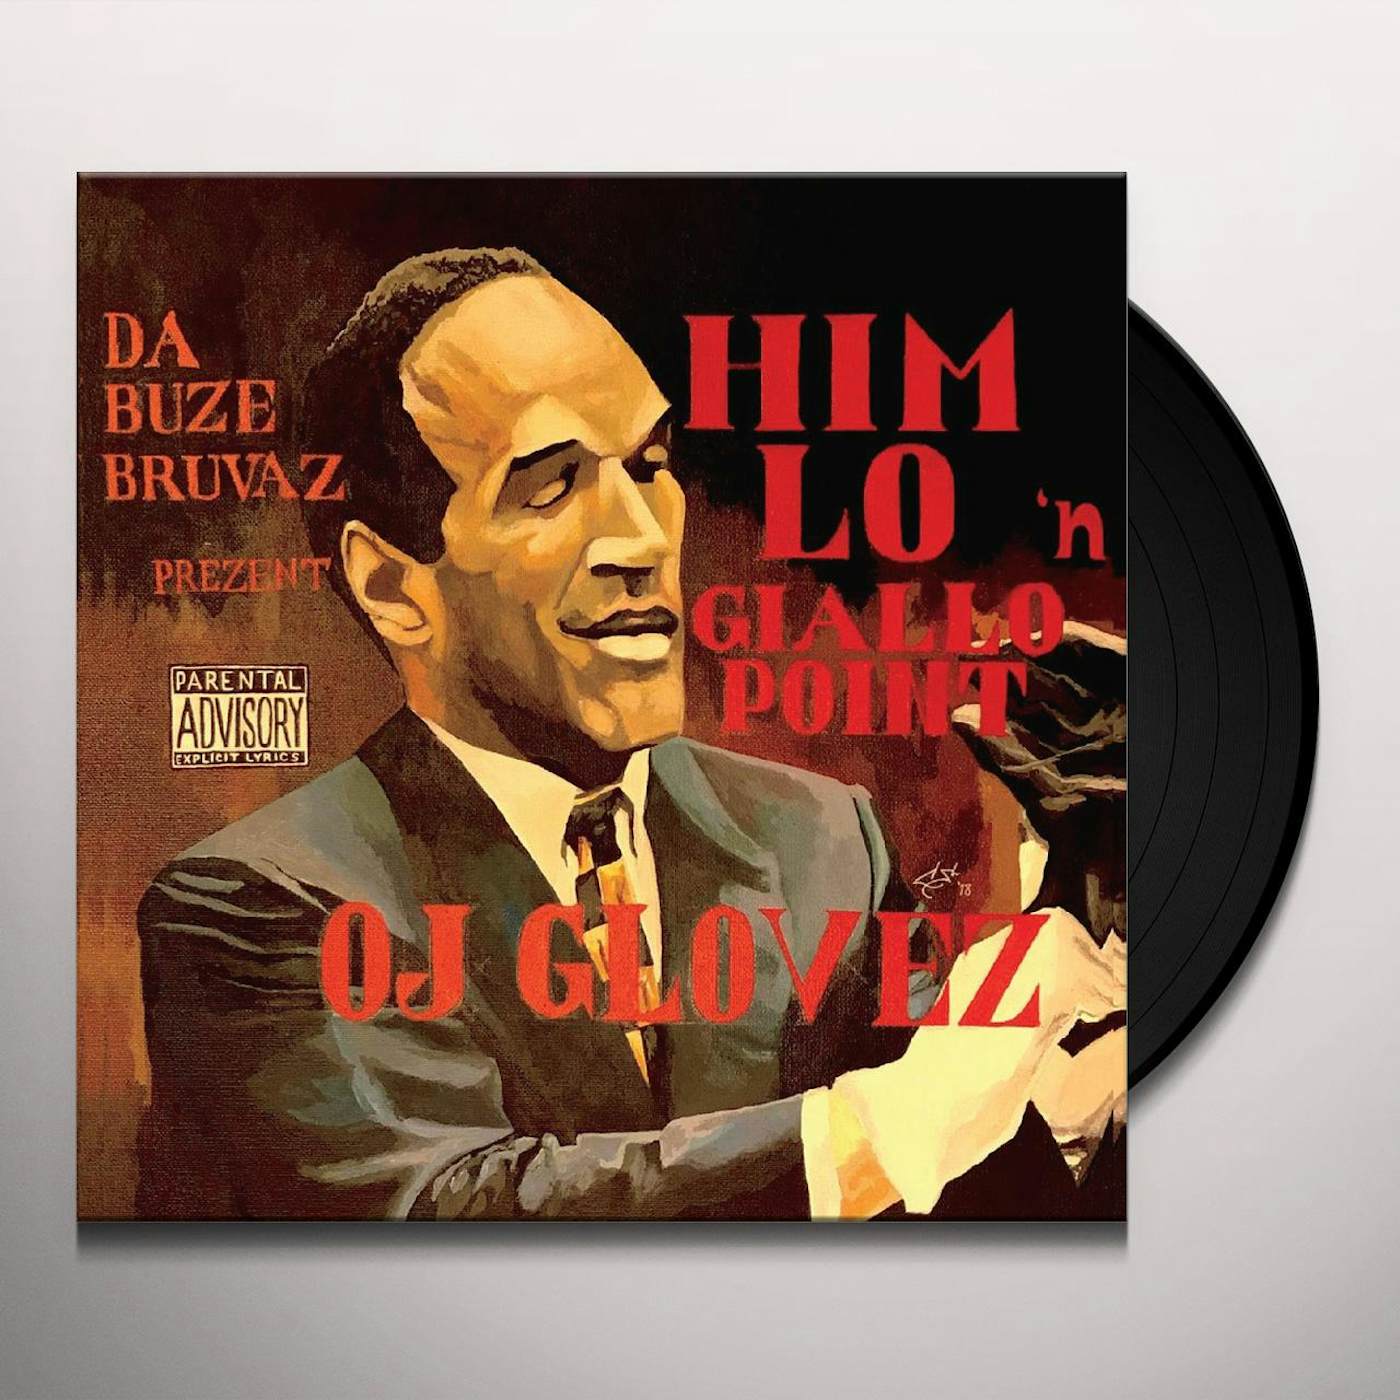 Da Buze Bruvaz Prezent: Him Lo & Giallo Point OJ GLOVEZ Vinyl Record